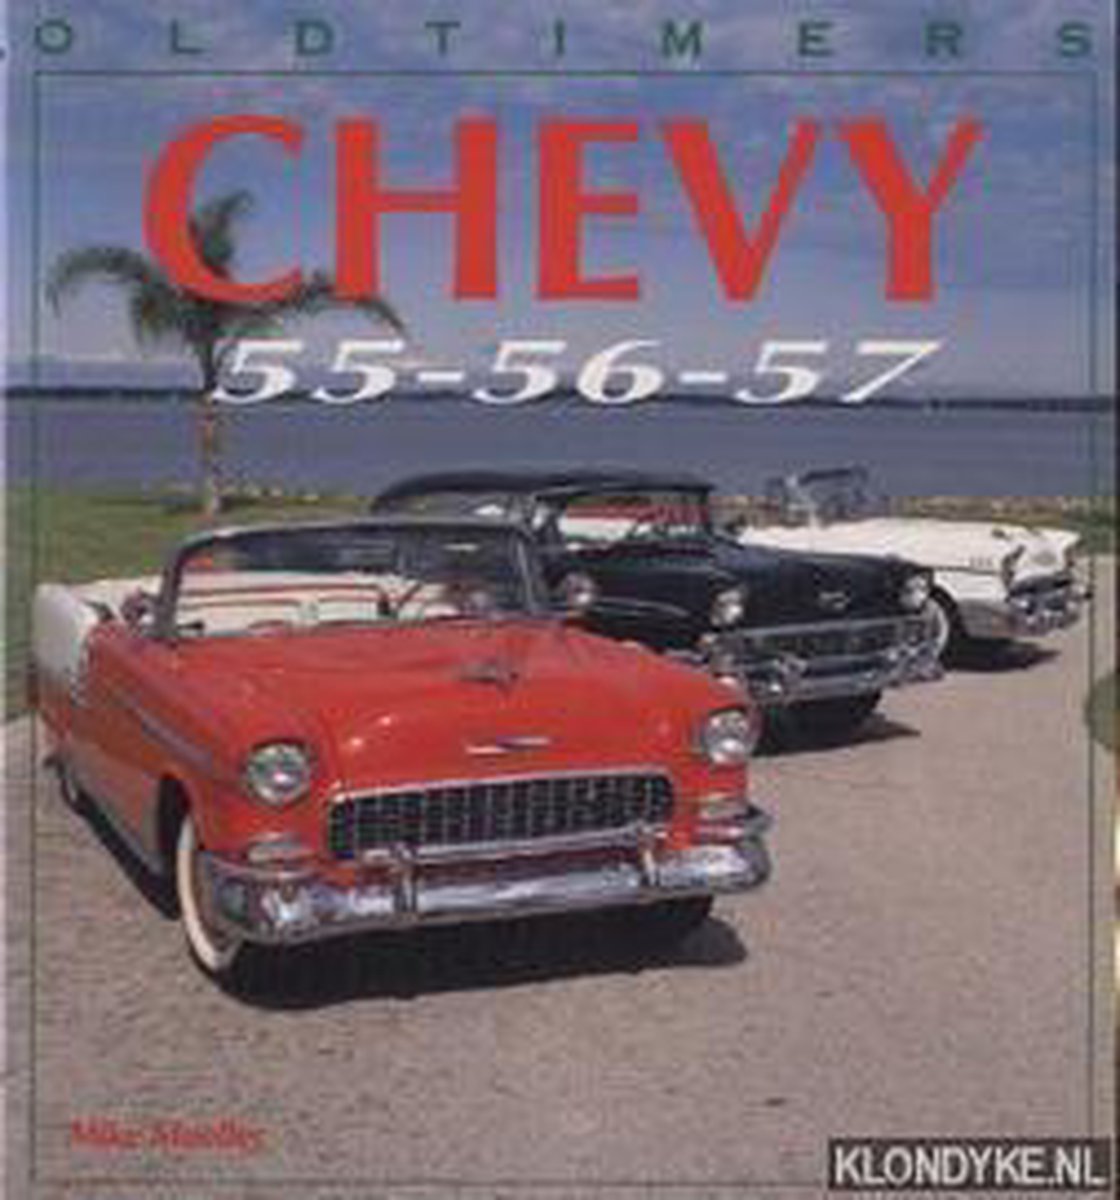 Chevy 55-56-57